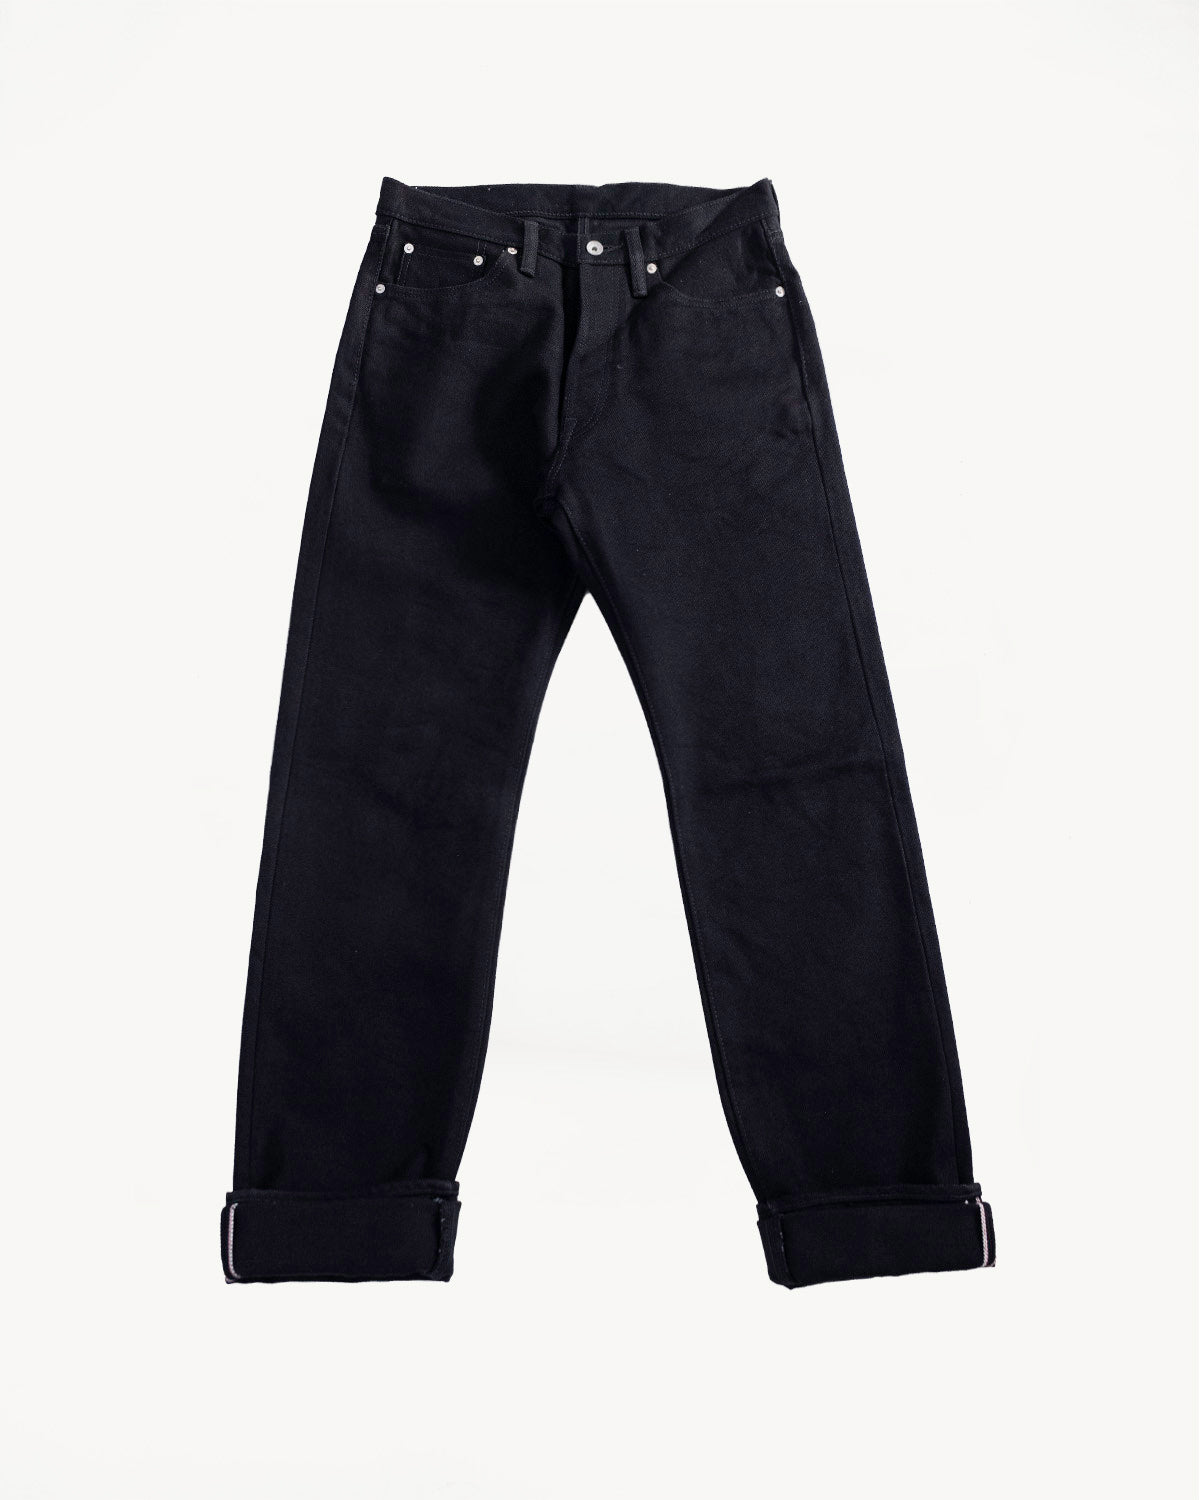 IH-888N 17oz Selvedge Denim Medium/High Rise Tapered Cut Jeans - Natur -  The Shop Vancouver